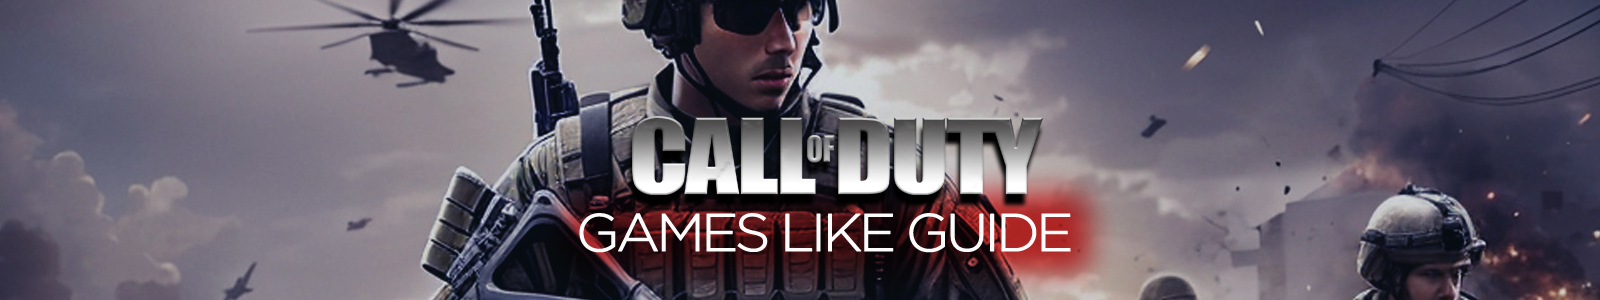 YESASIA: Call of Duty: Modern Warfare III (Japan Version) - - PlayStation 5  (PS5) Games - Free Shipping